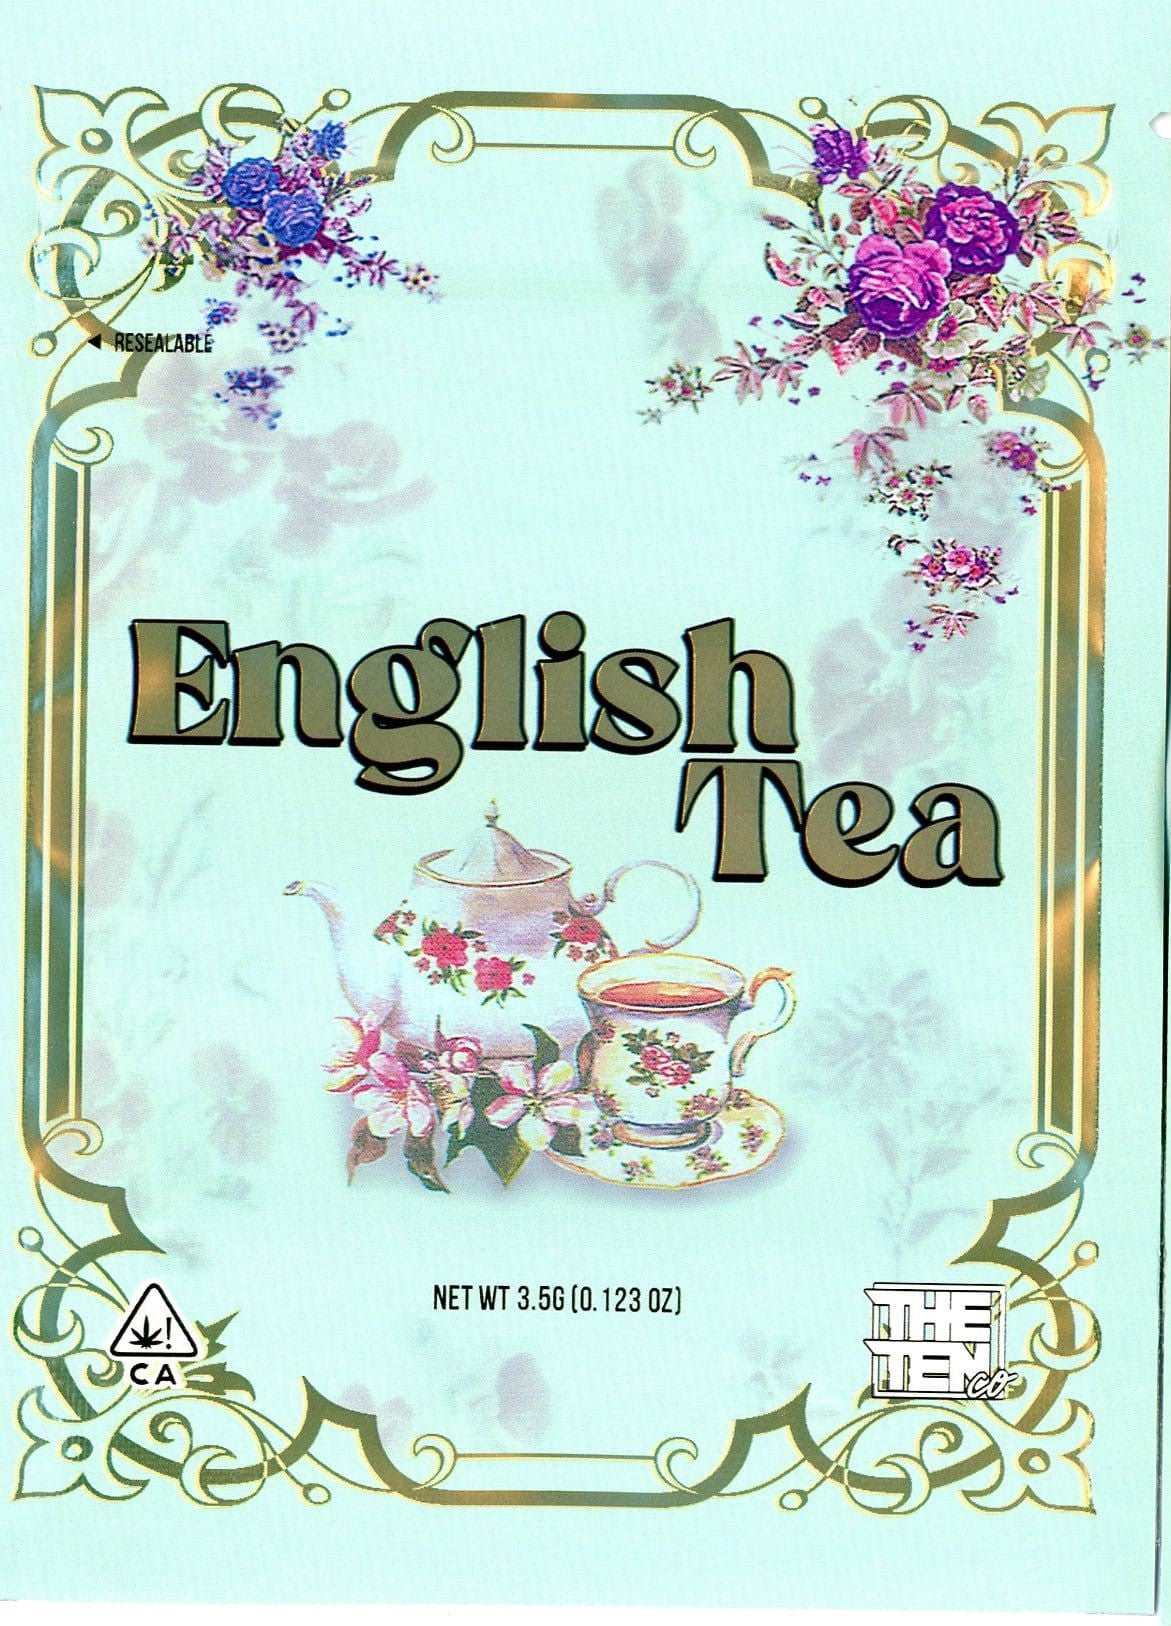 English Tea Mylar Bags 3.5g The Ten Co MYLAR BAG WITH PRINTED GUSSET, METALLIC MYLAR BAG front